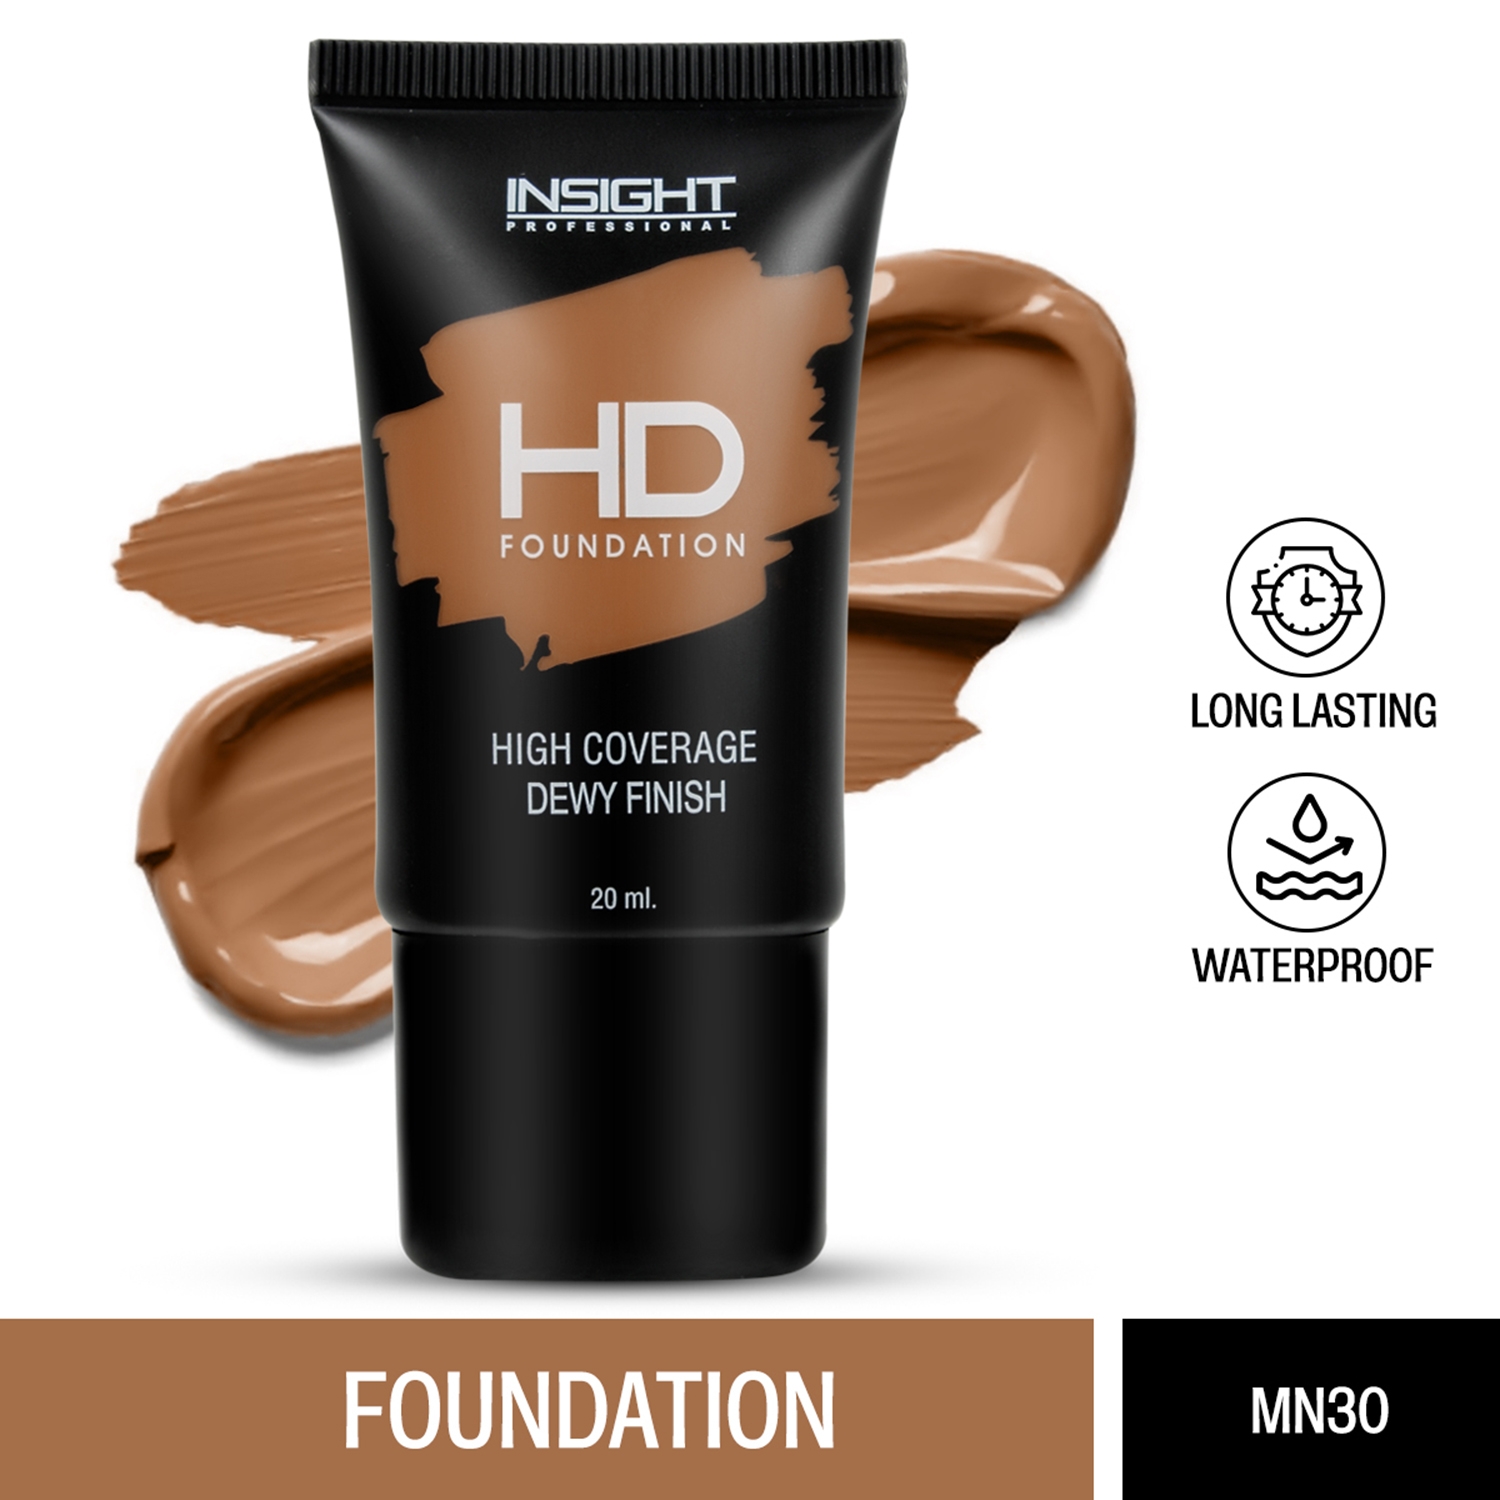 Insight Cosmetics | Insight Cosmetics Dewy Finish HD Foundation - MN 30 (20ml)